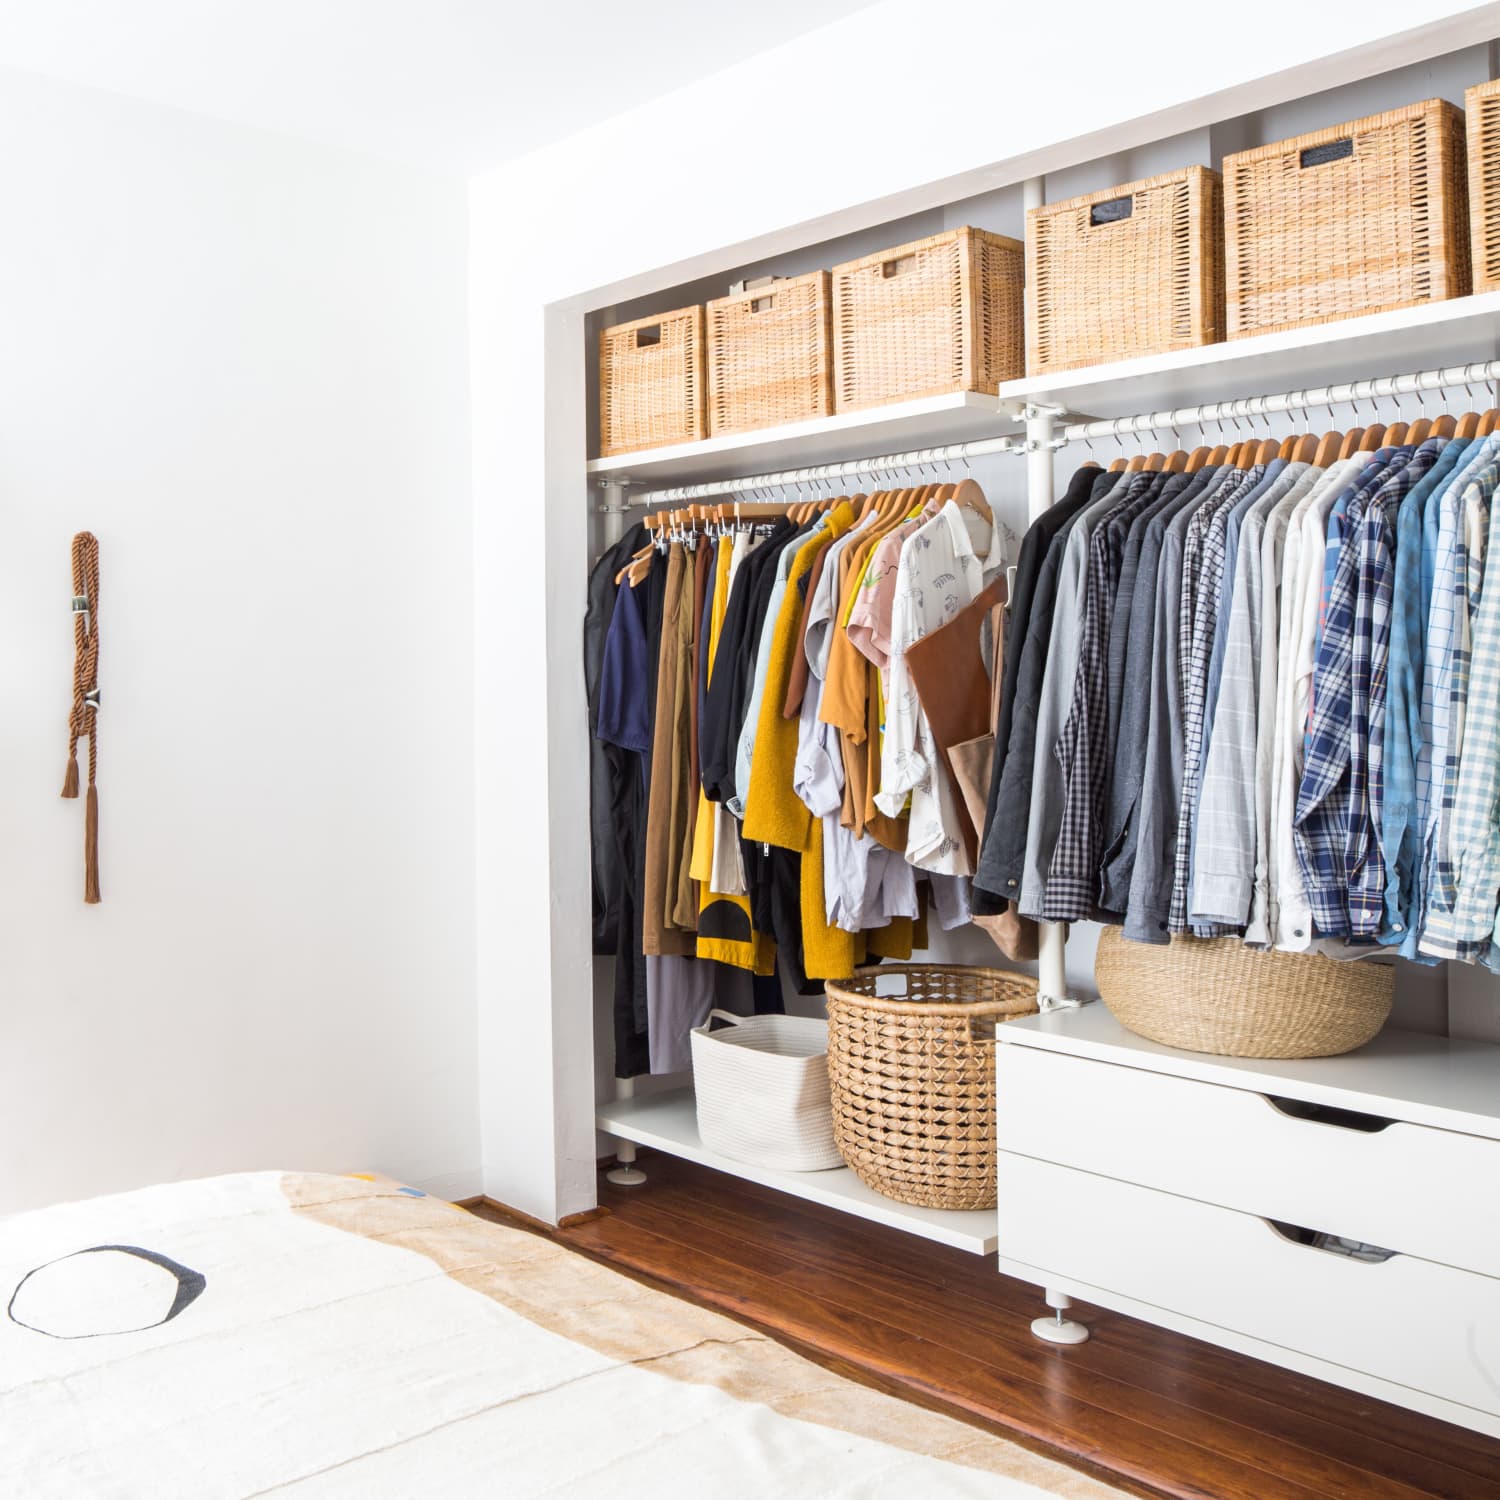 Design Your Own Closet with Custom Closets Organizer Systems